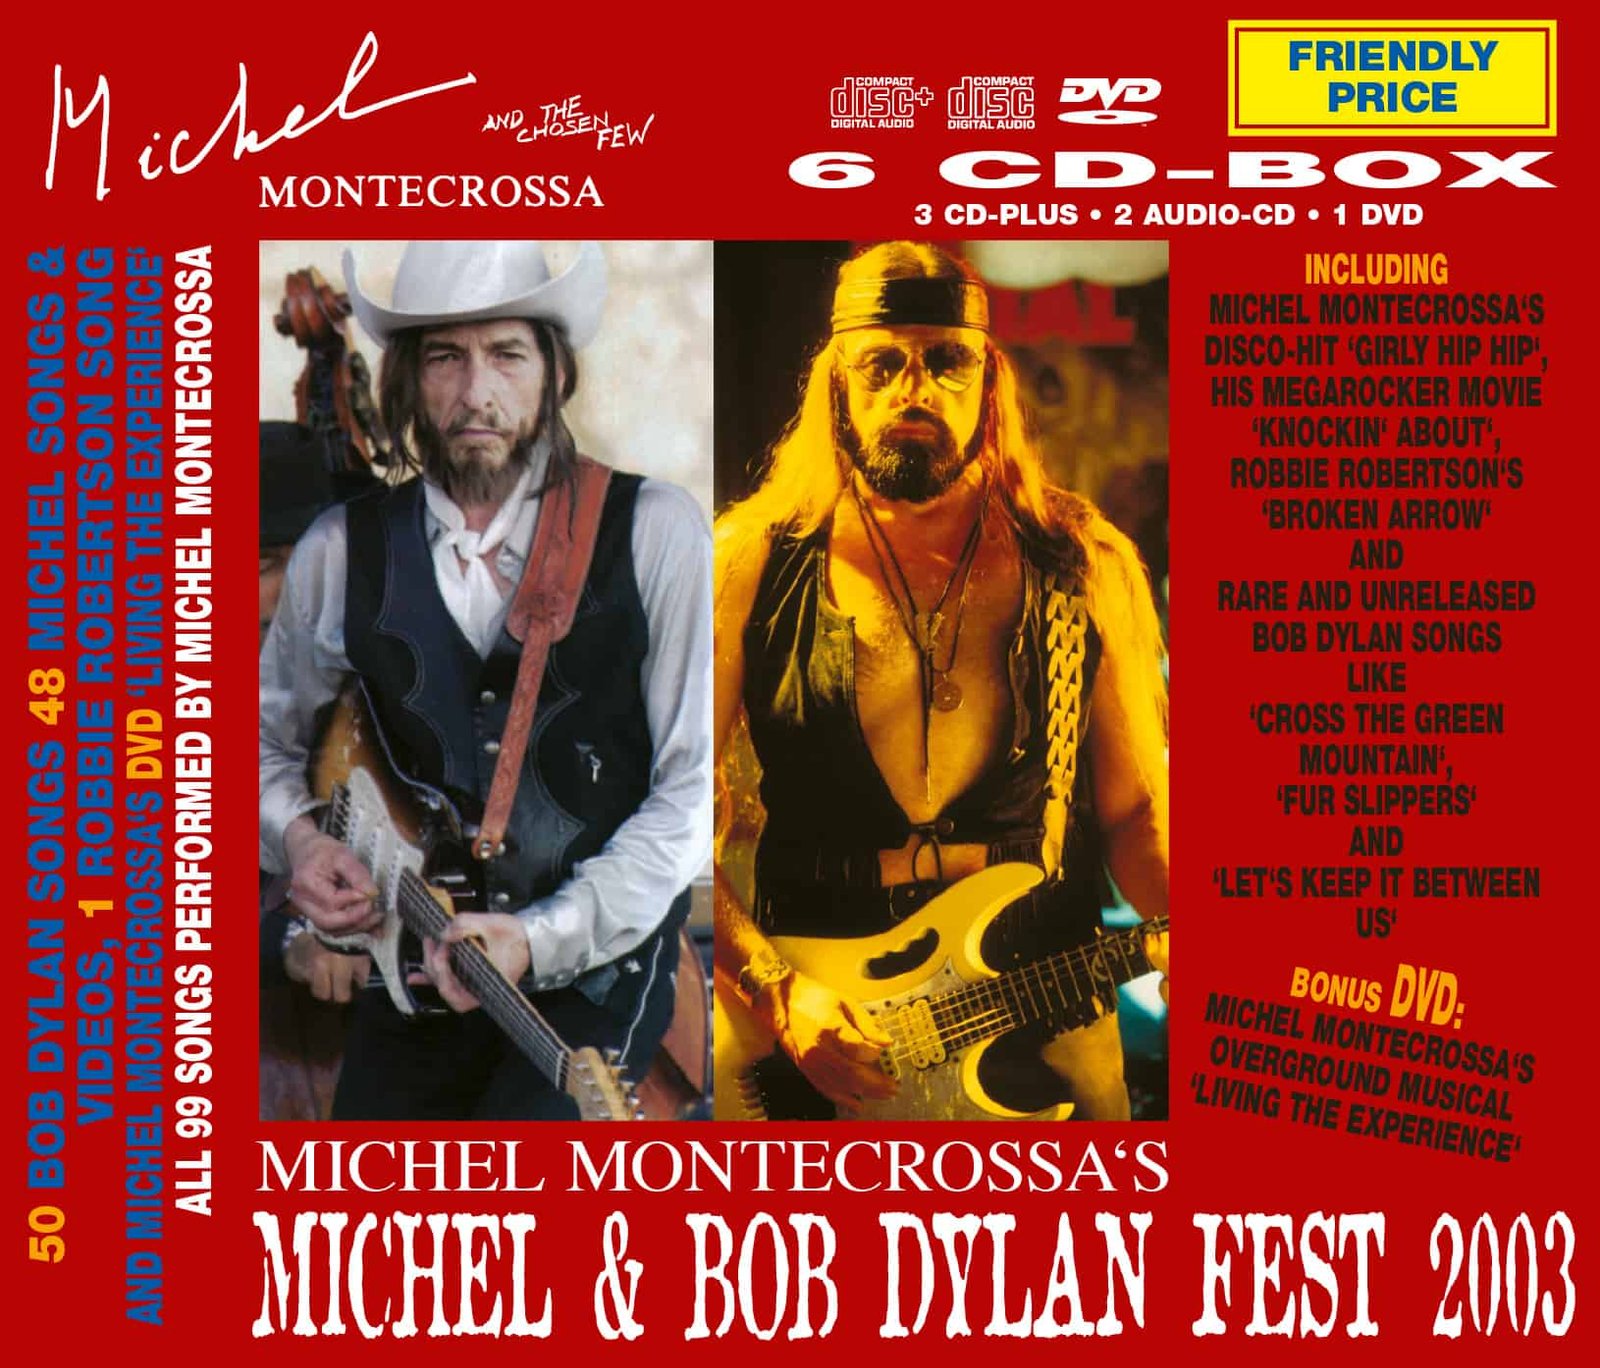 Michel Montecrossa’s Michel & Bob Dylan Fest 2003